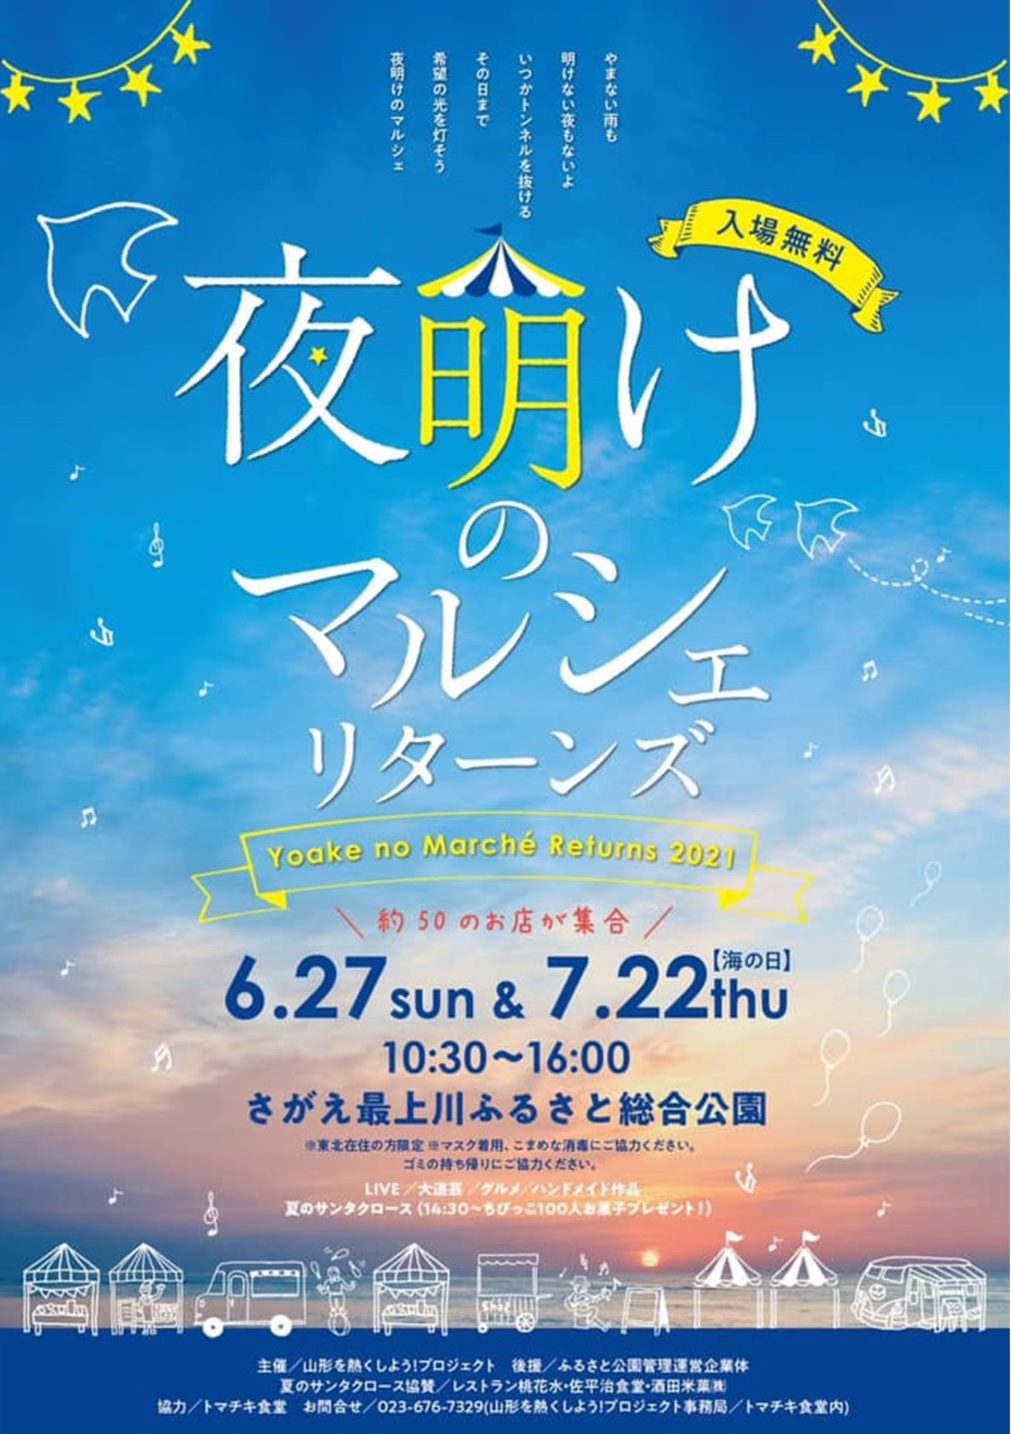 Visit Yamagata 公式 今週末は 夜明けのマルシェリターンズ 寒河江市 しょうない金魚まつり 庄内町 特急ゆめりあノスタルジック号 新庄市 など ユニークな イベント が開催される模様です 週末イベント情報 6月26日 土 6月27日 日